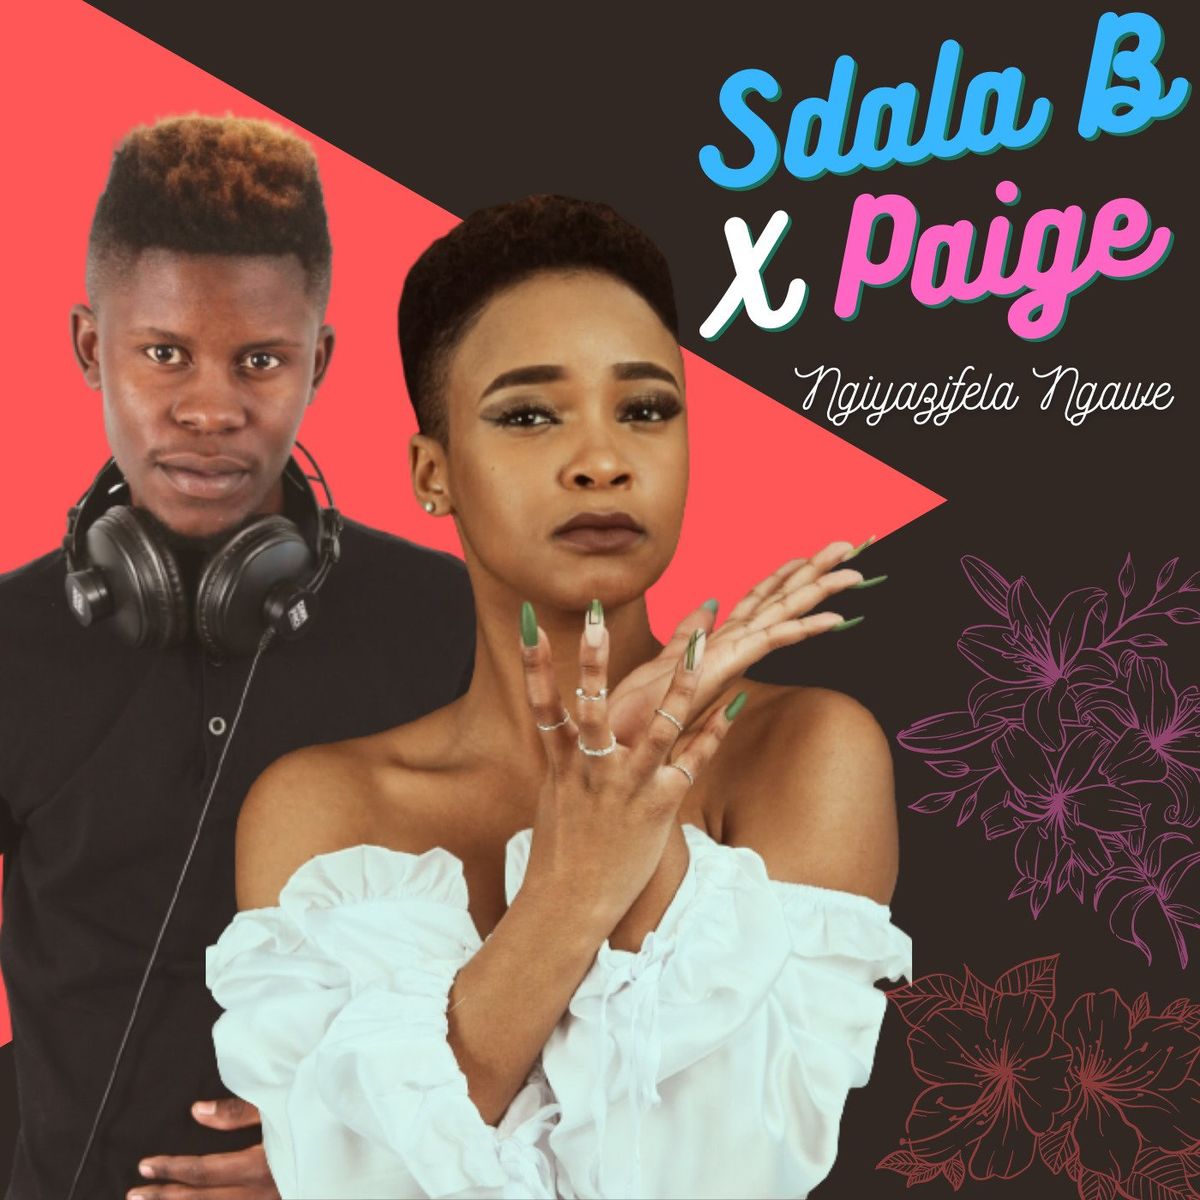 Sdala B & Paige – Merry Me (feat. DJ Call Me)